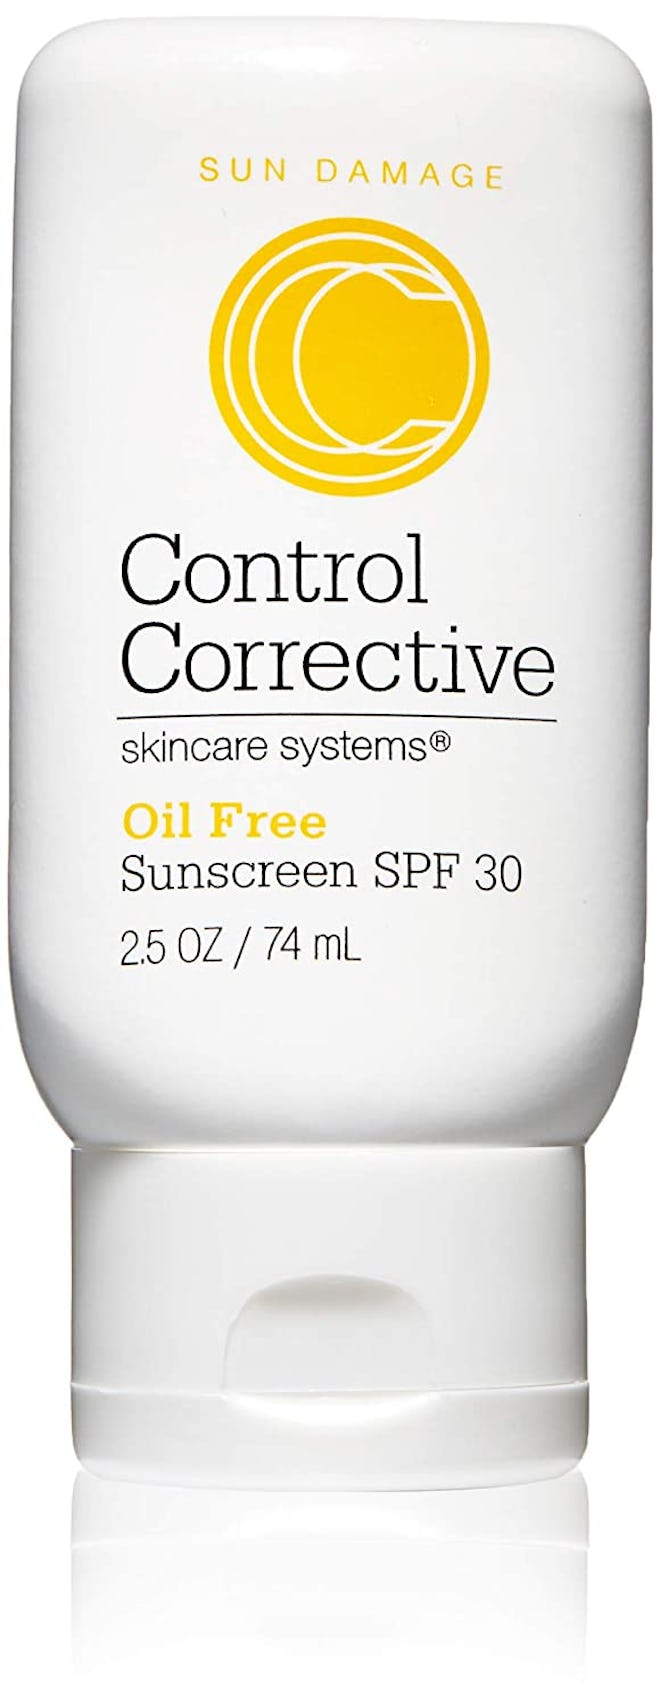 Control Corrective Oil-Free Sunscreen 